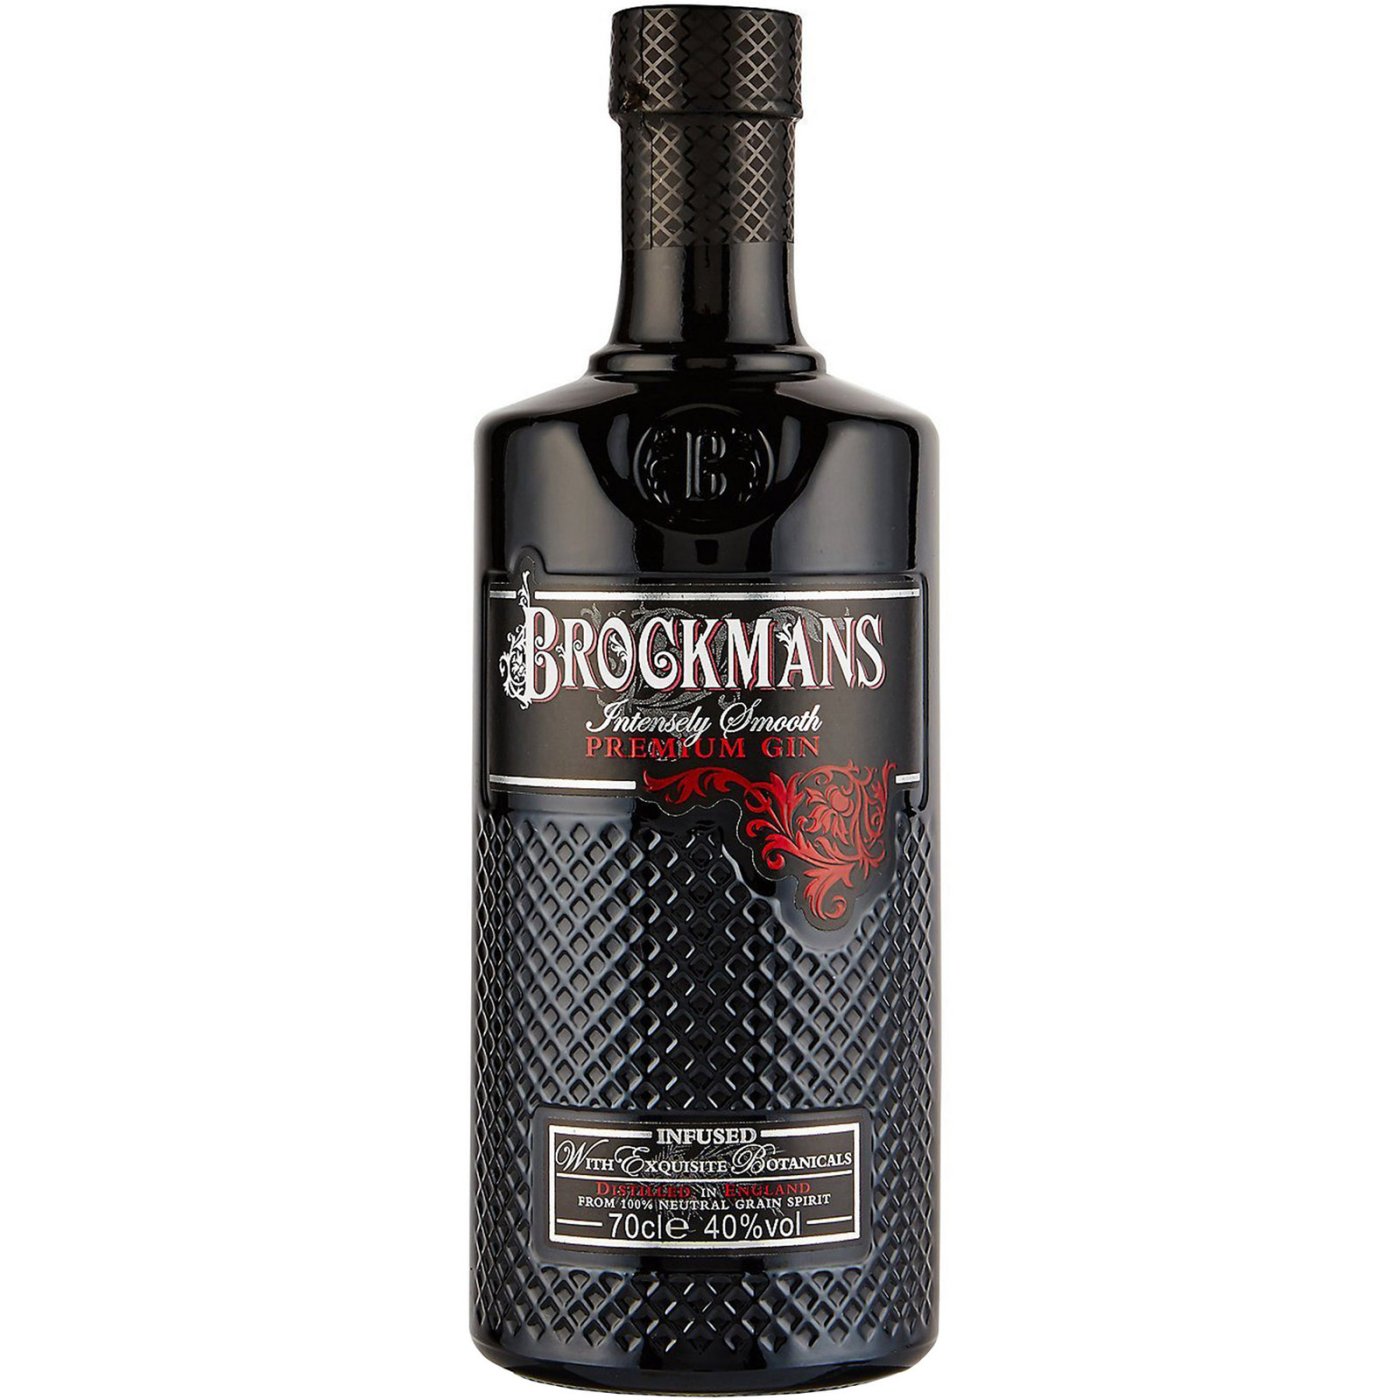 Brockmans Gin 1 liter